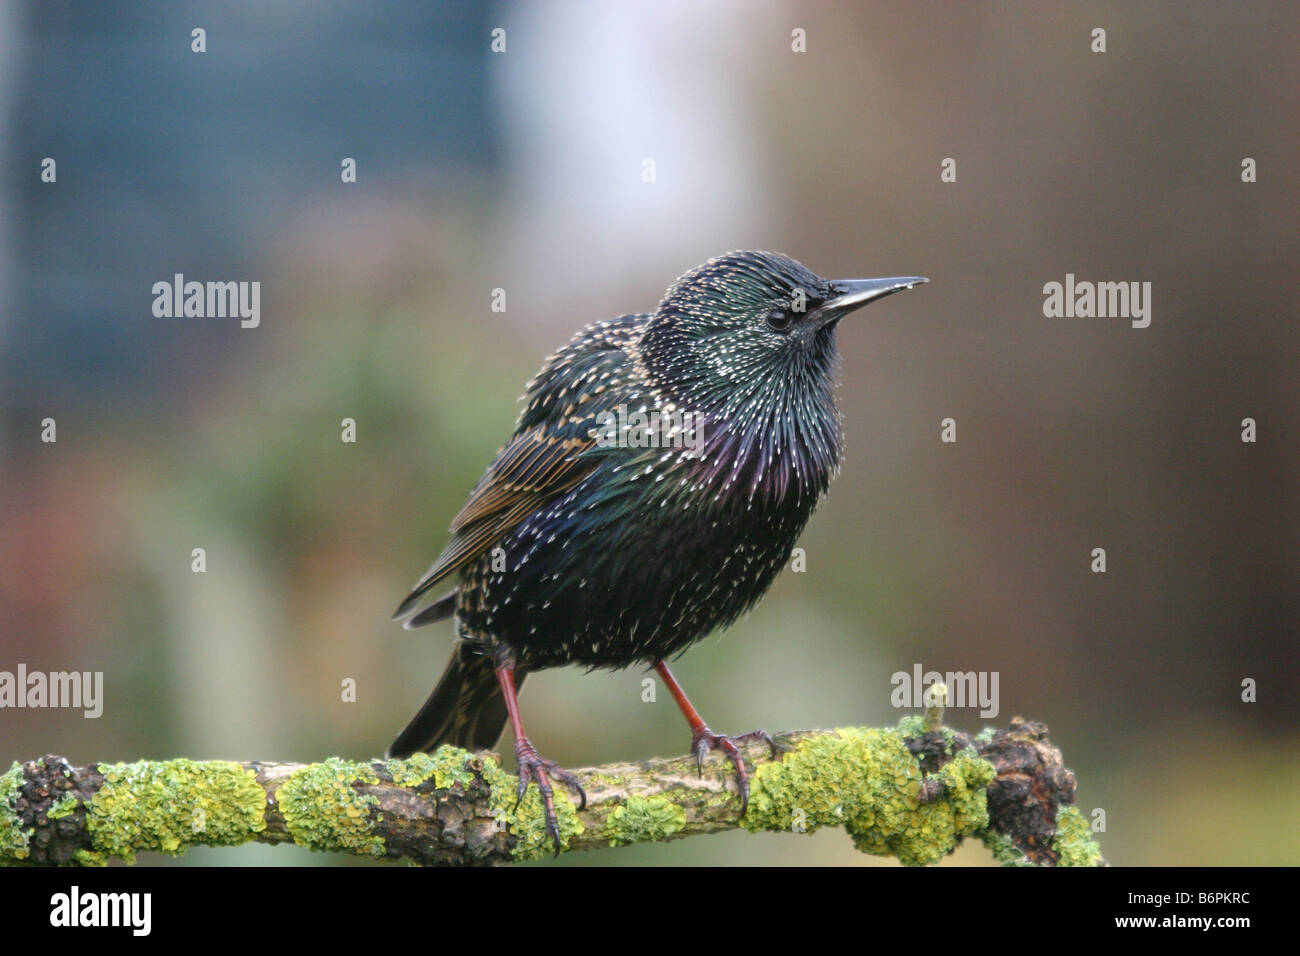 Starling sturnus vulgaris perched on lichen covered log Stock Photo